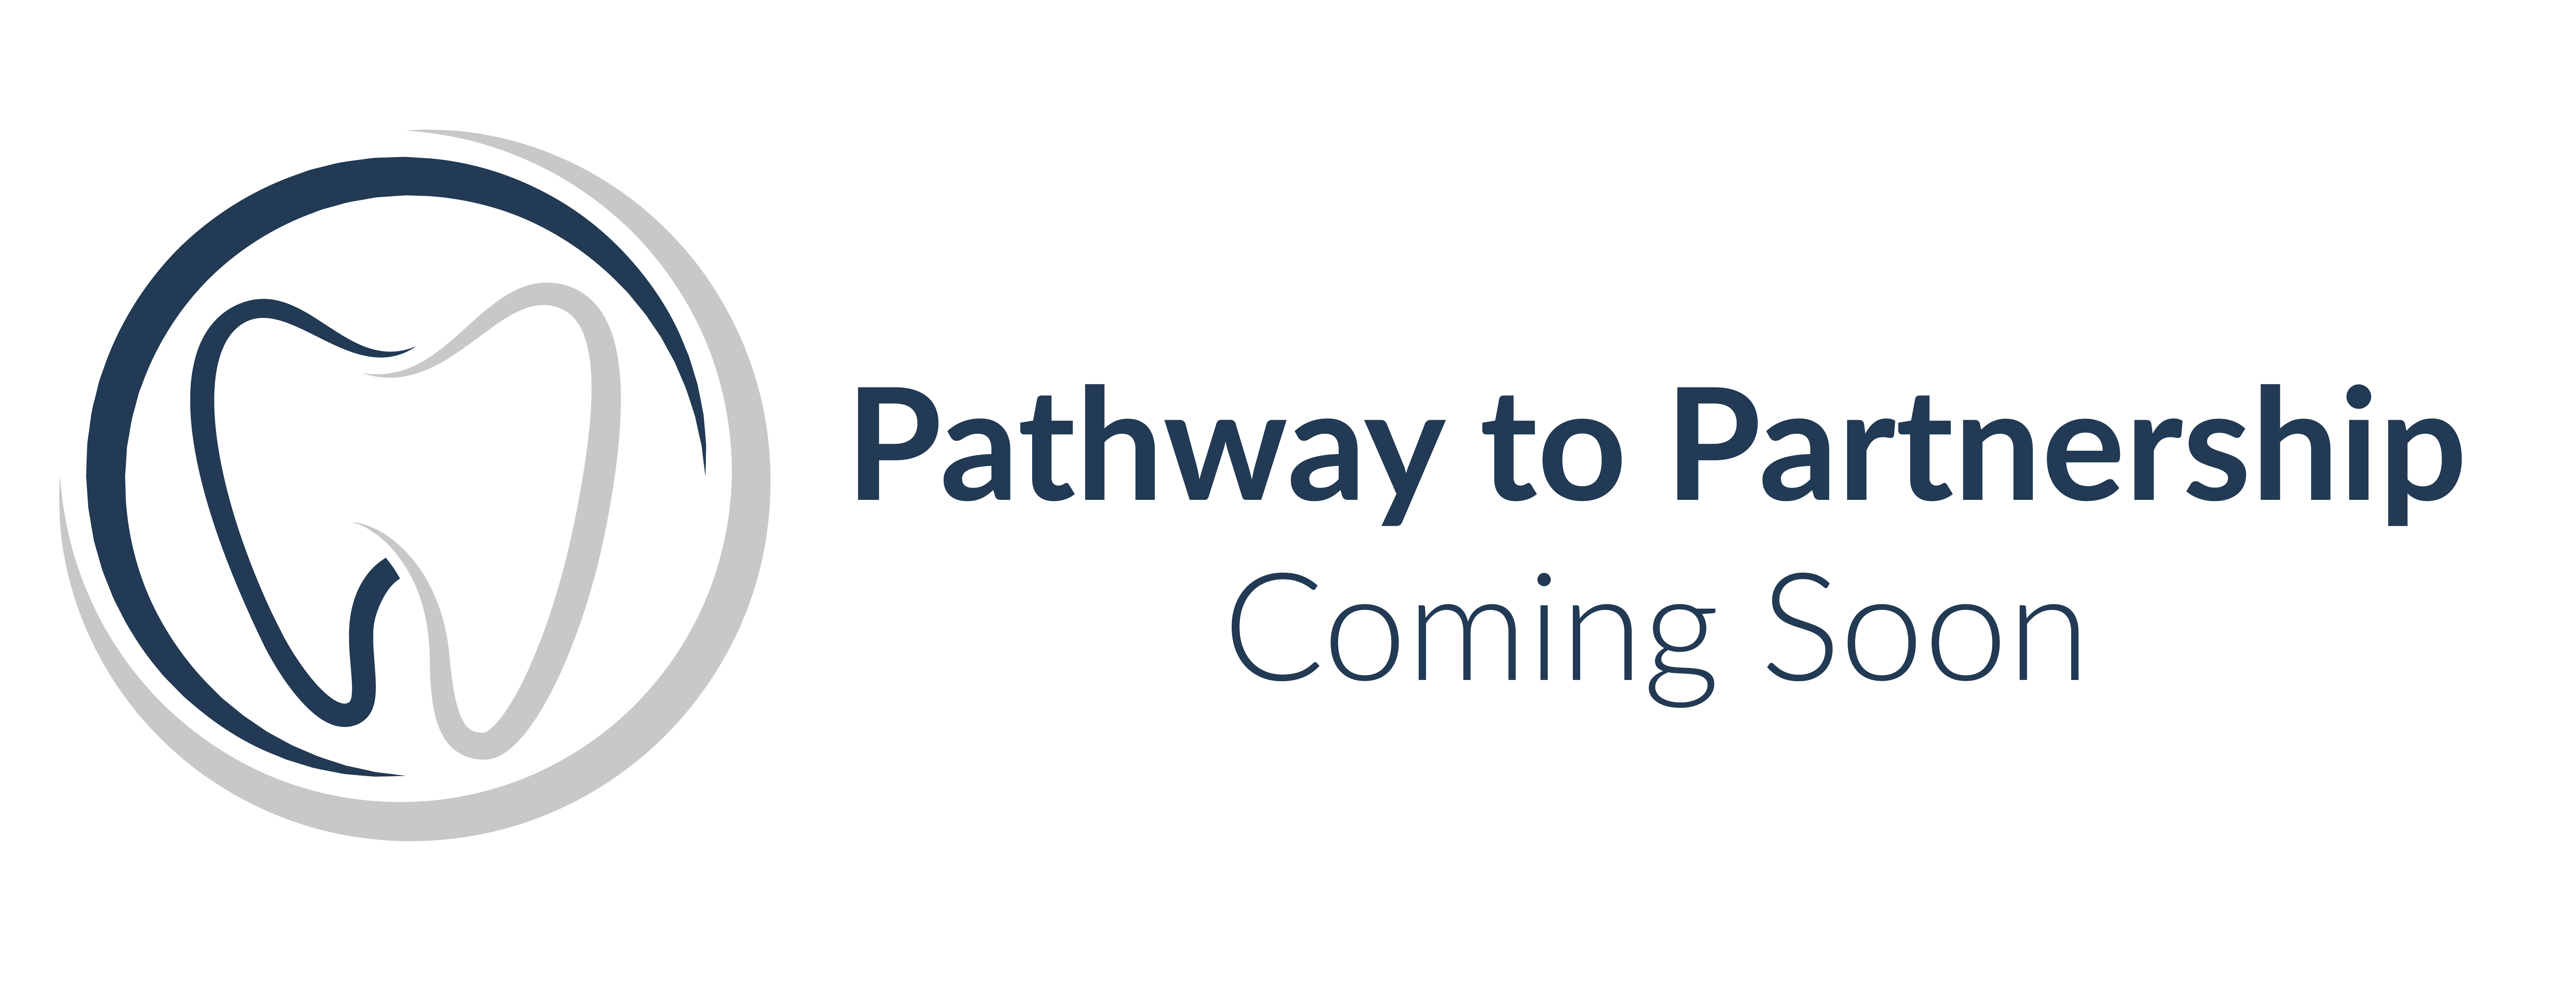 CMS Pathway to Partnership